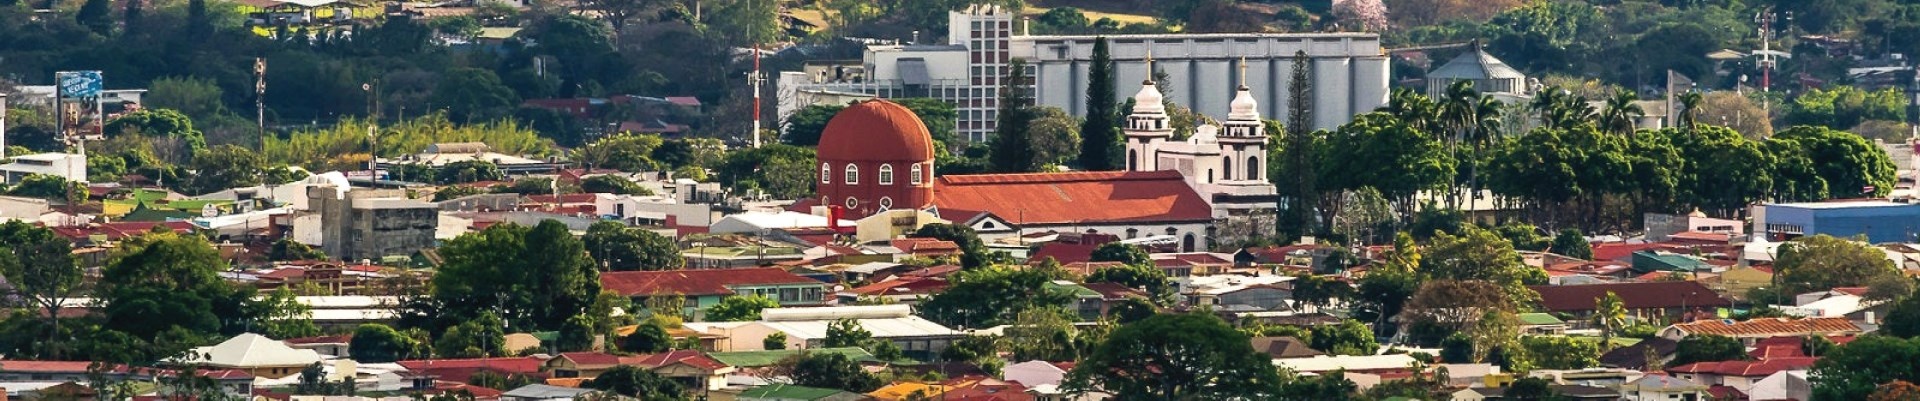 Casas de alquiler en Costa Rica